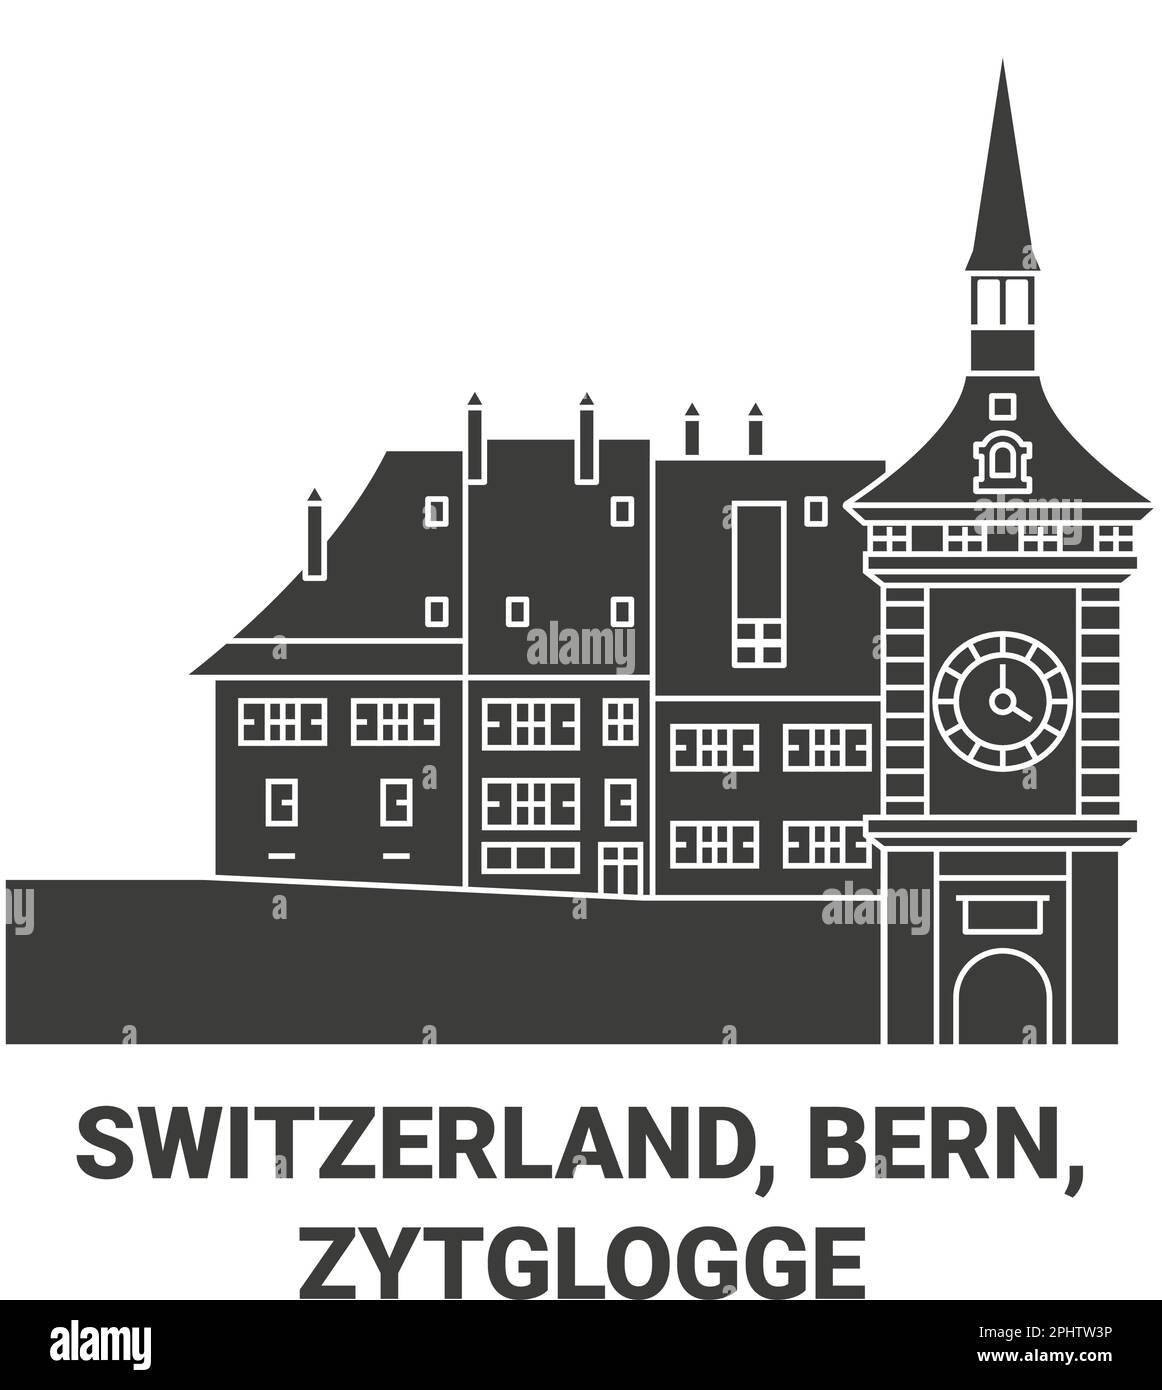 Switzerland, Bern, Zytglogge travel landmark vector illustration Stock Vector